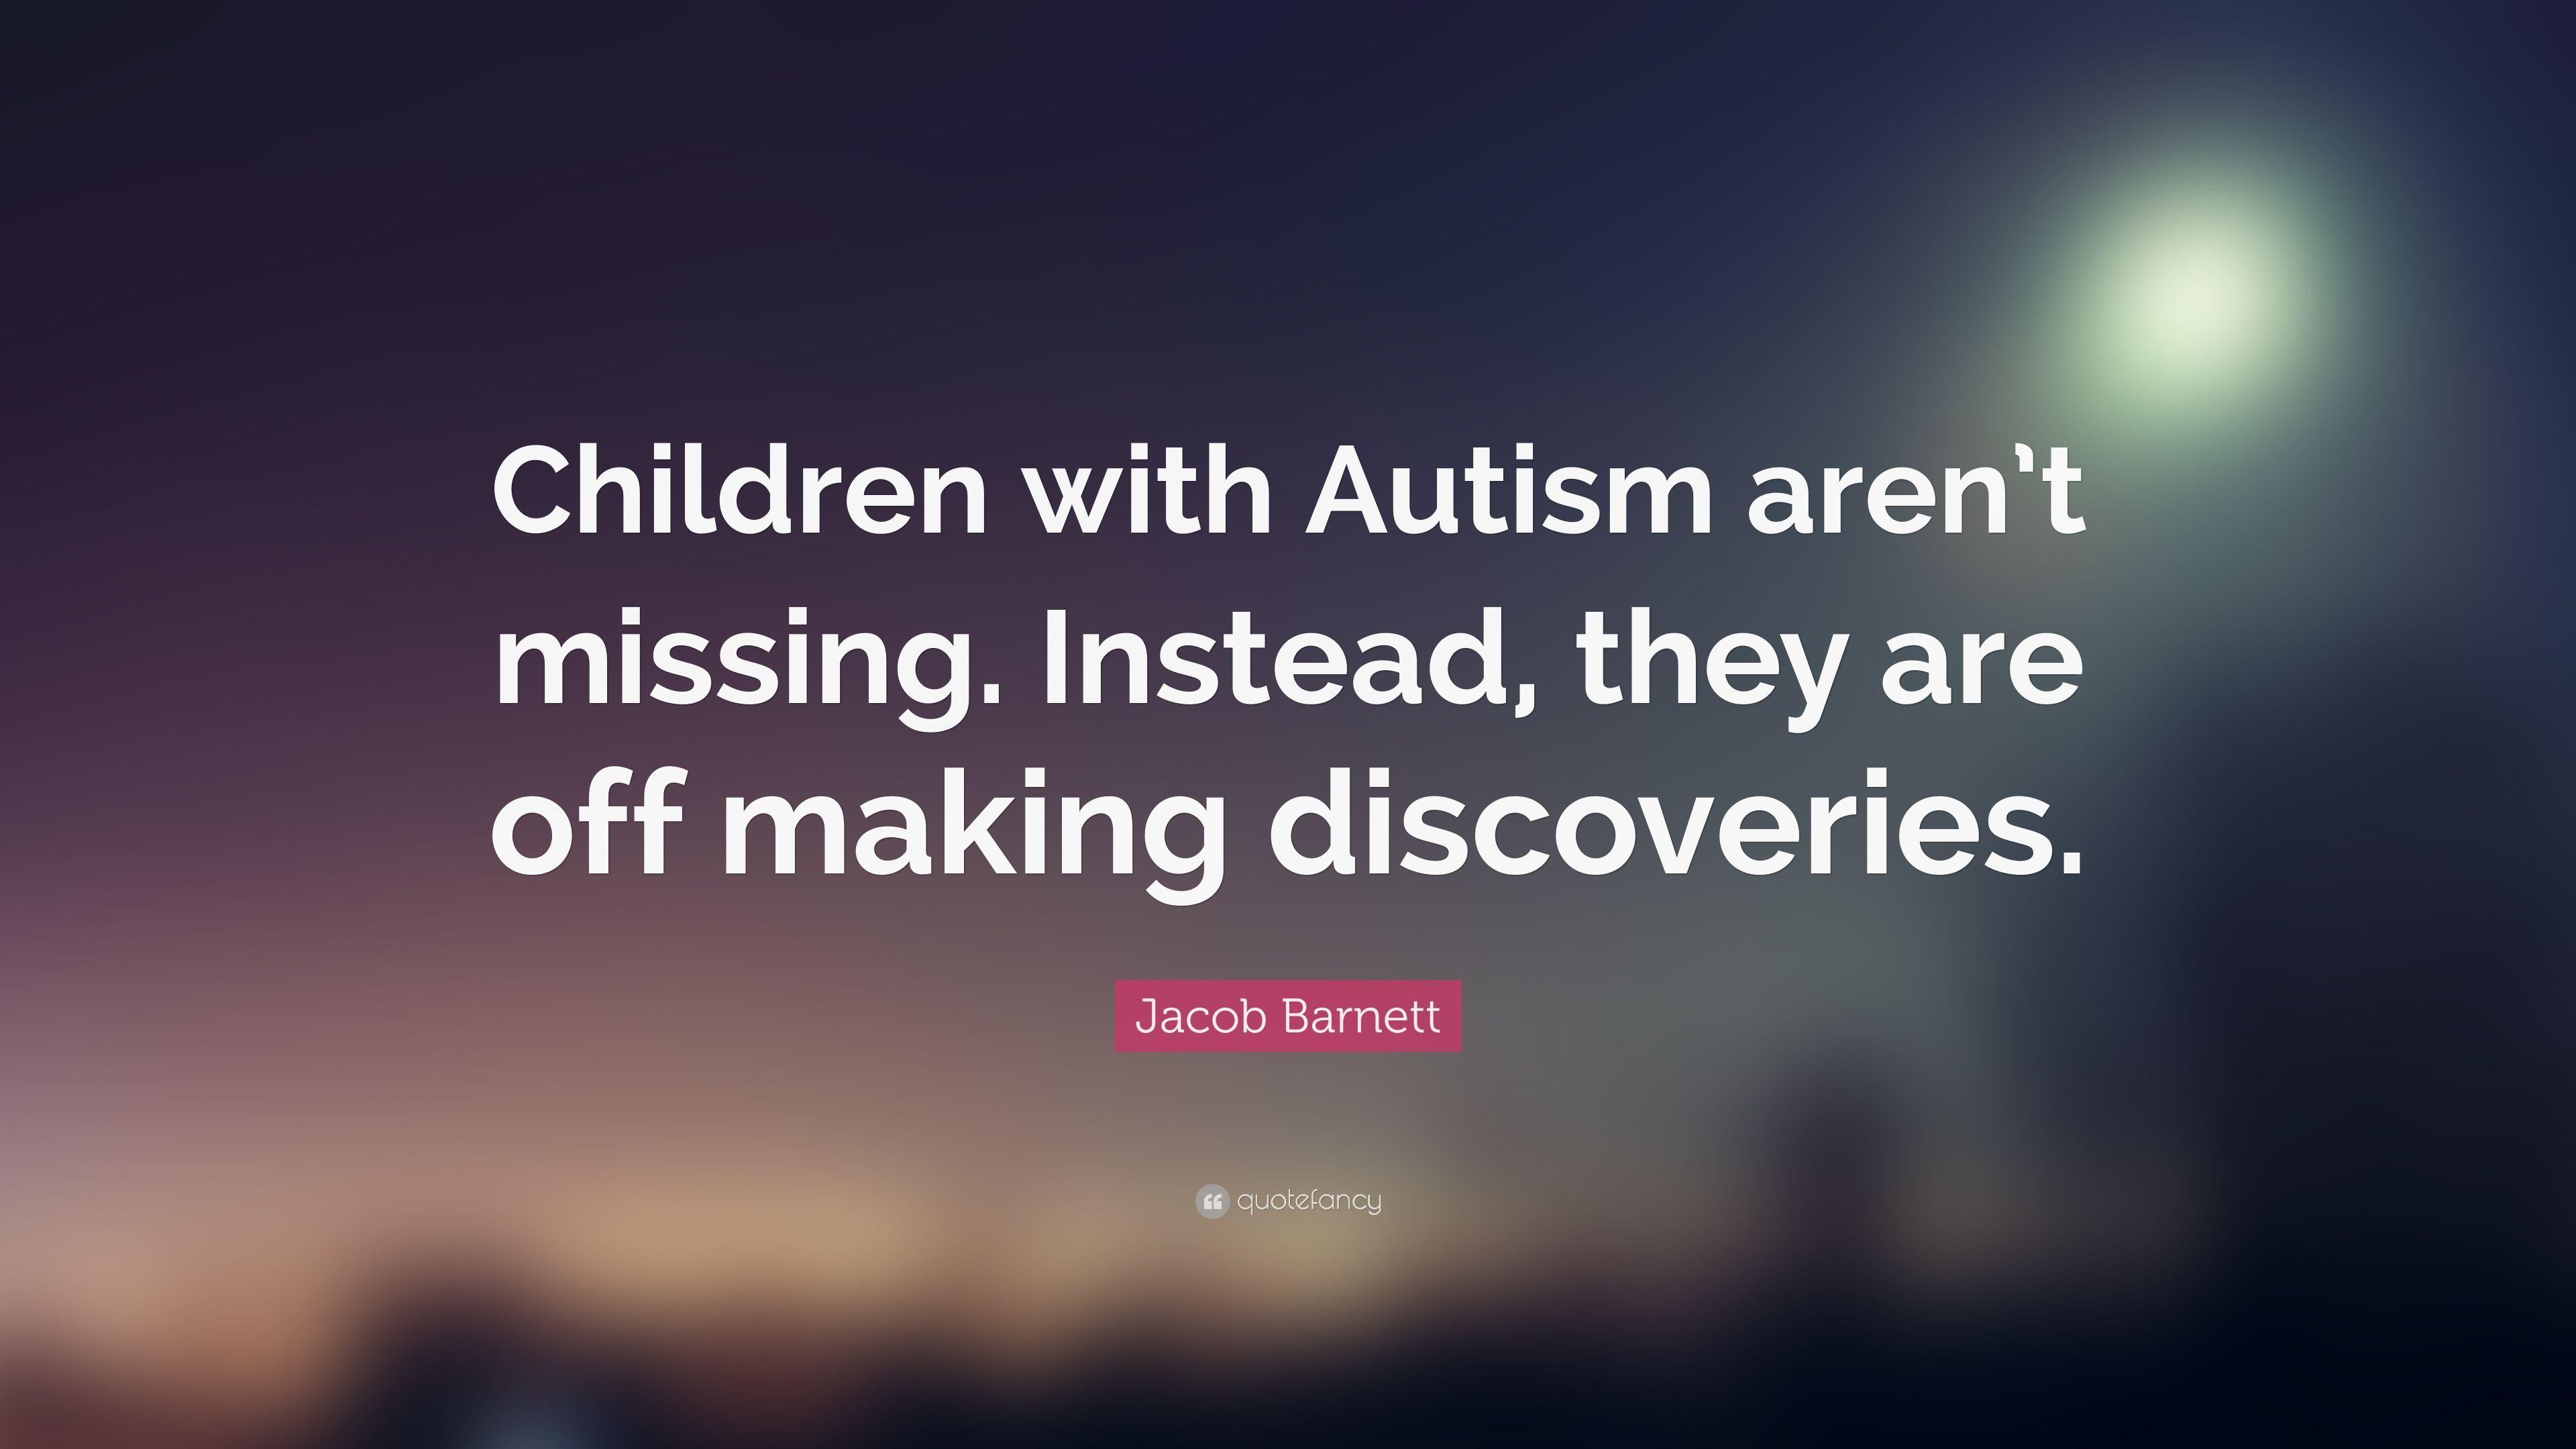 Jacob Barnett Quote: “Children with Autism aren't missing. Instead